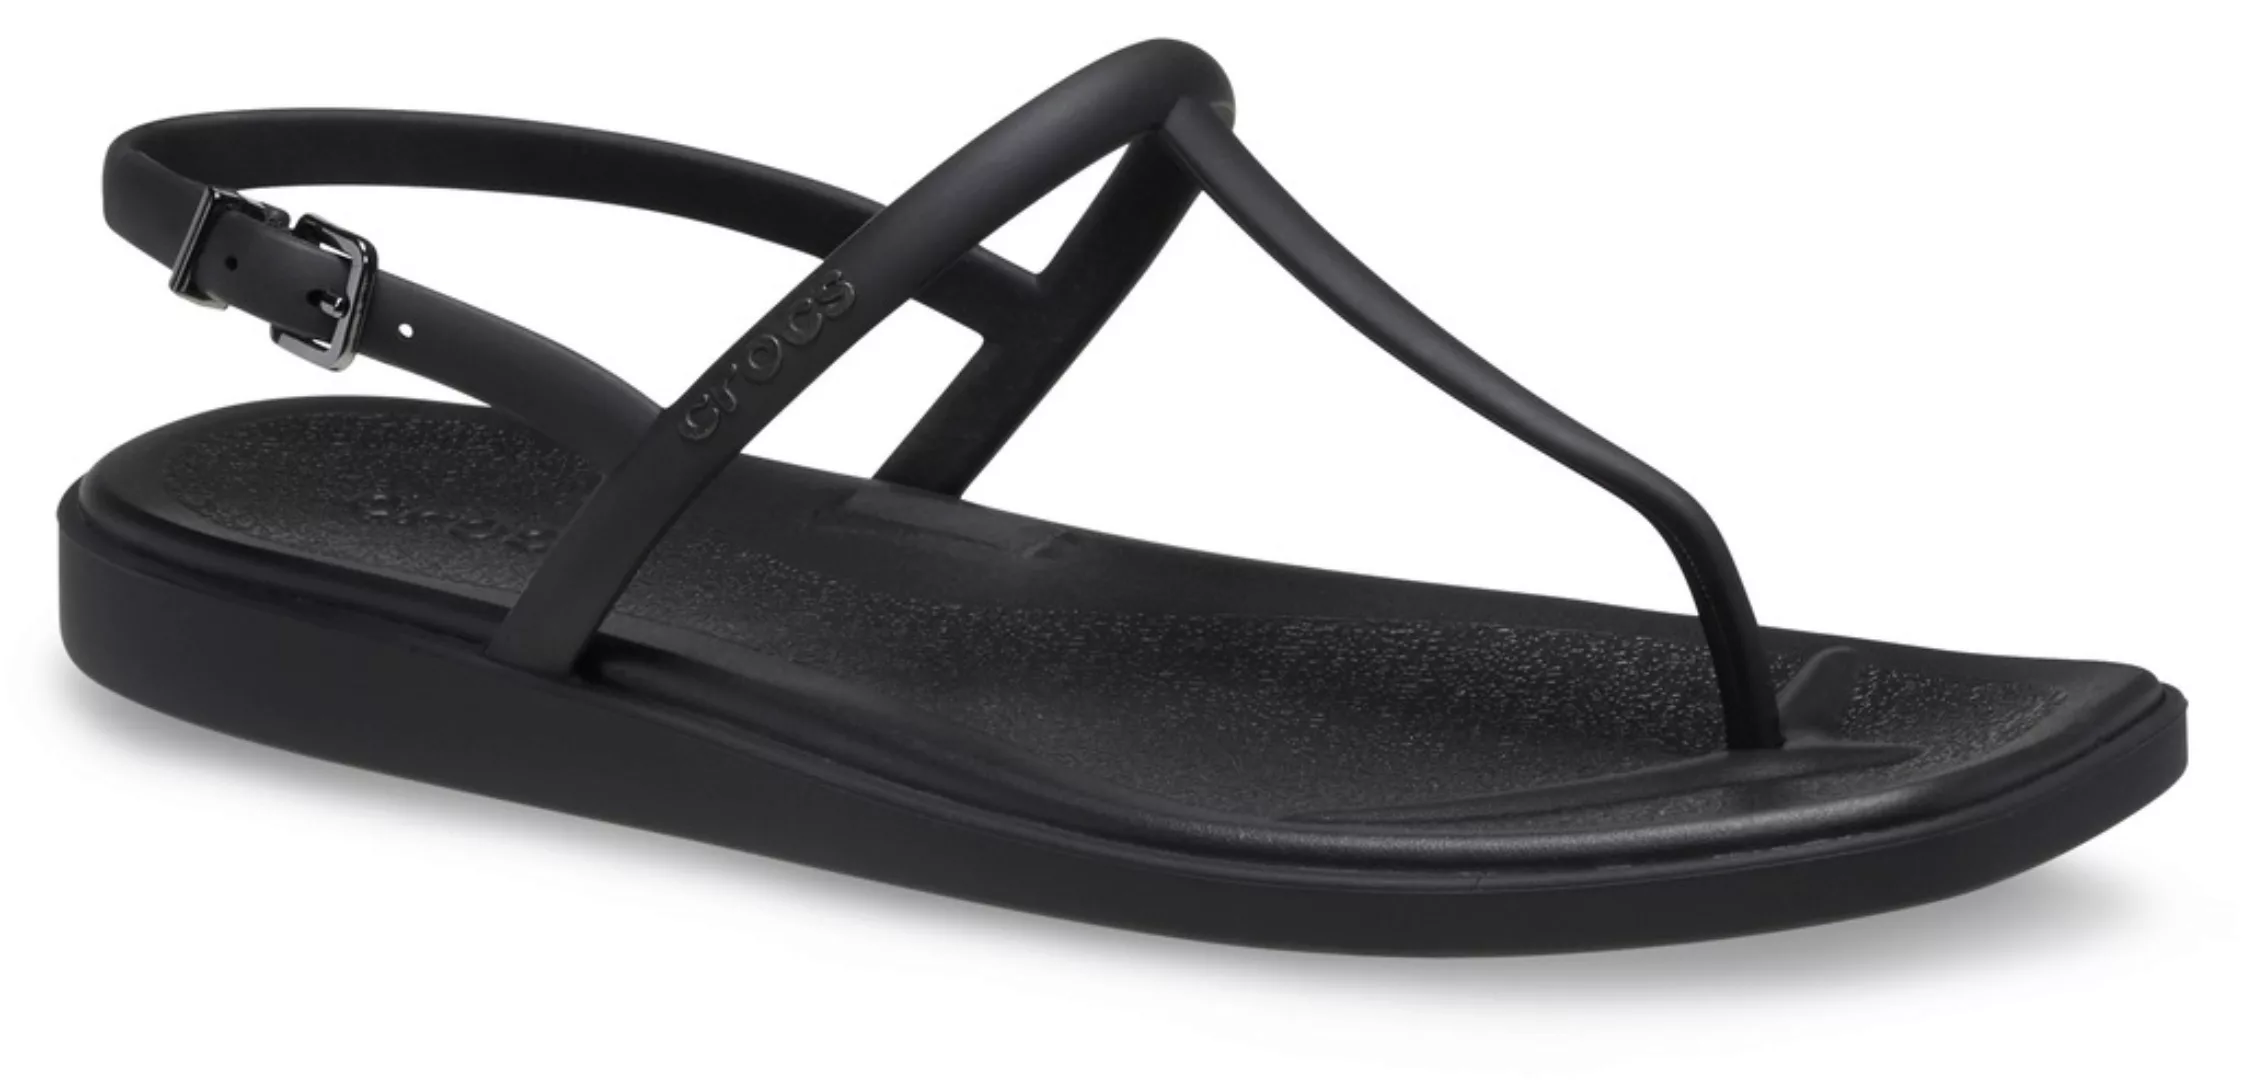 Crocs Sandale "Miami Thong Sandal", Zehentrenner, Sandalette, Sommerschuh m günstig online kaufen